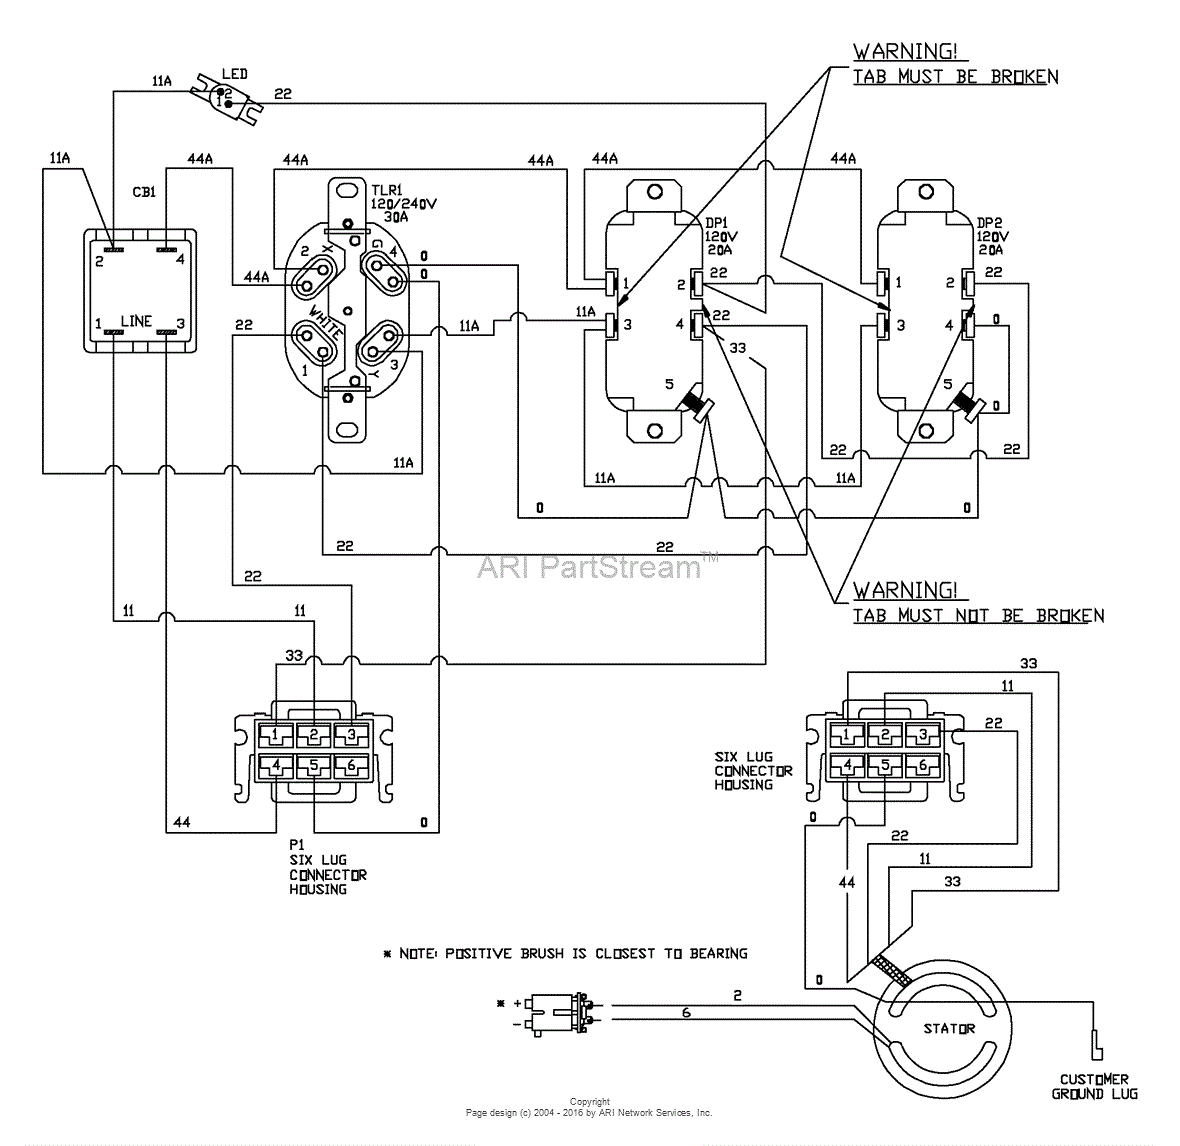 Briggs and Stratton Power Products 030324-0 - 5,550 Watt ... tecumseh condenser wiring diagram 